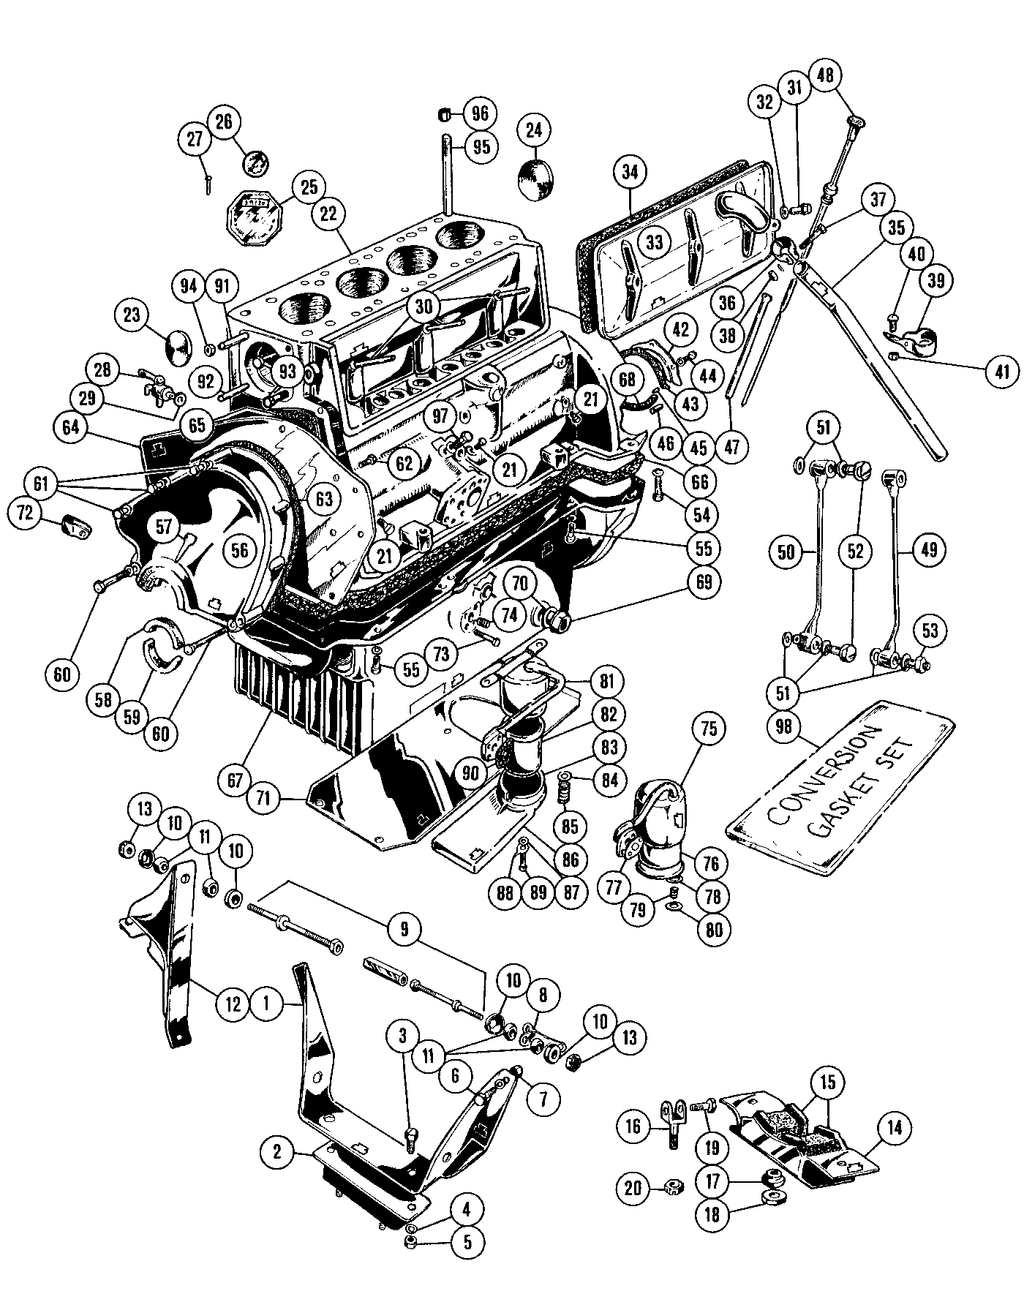 MGTD-TF 1949-1955 - Engine mounts | Webshop Anglo Parts - 1